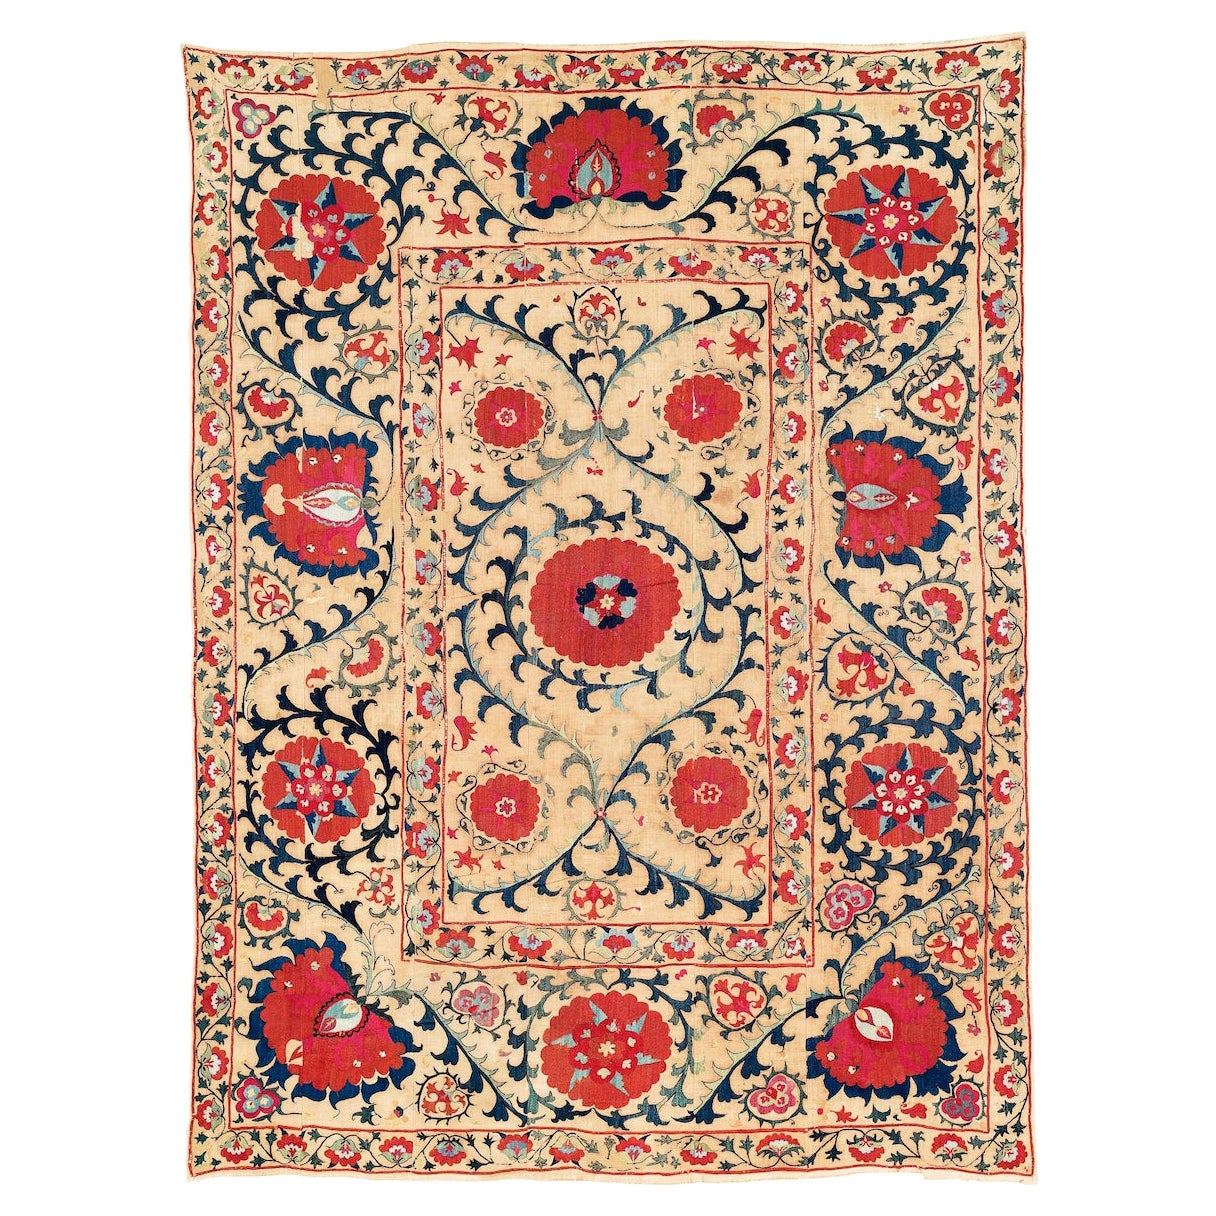 Antique Uzbek Suzani Embroidery Rug, c. 1800 For Sale